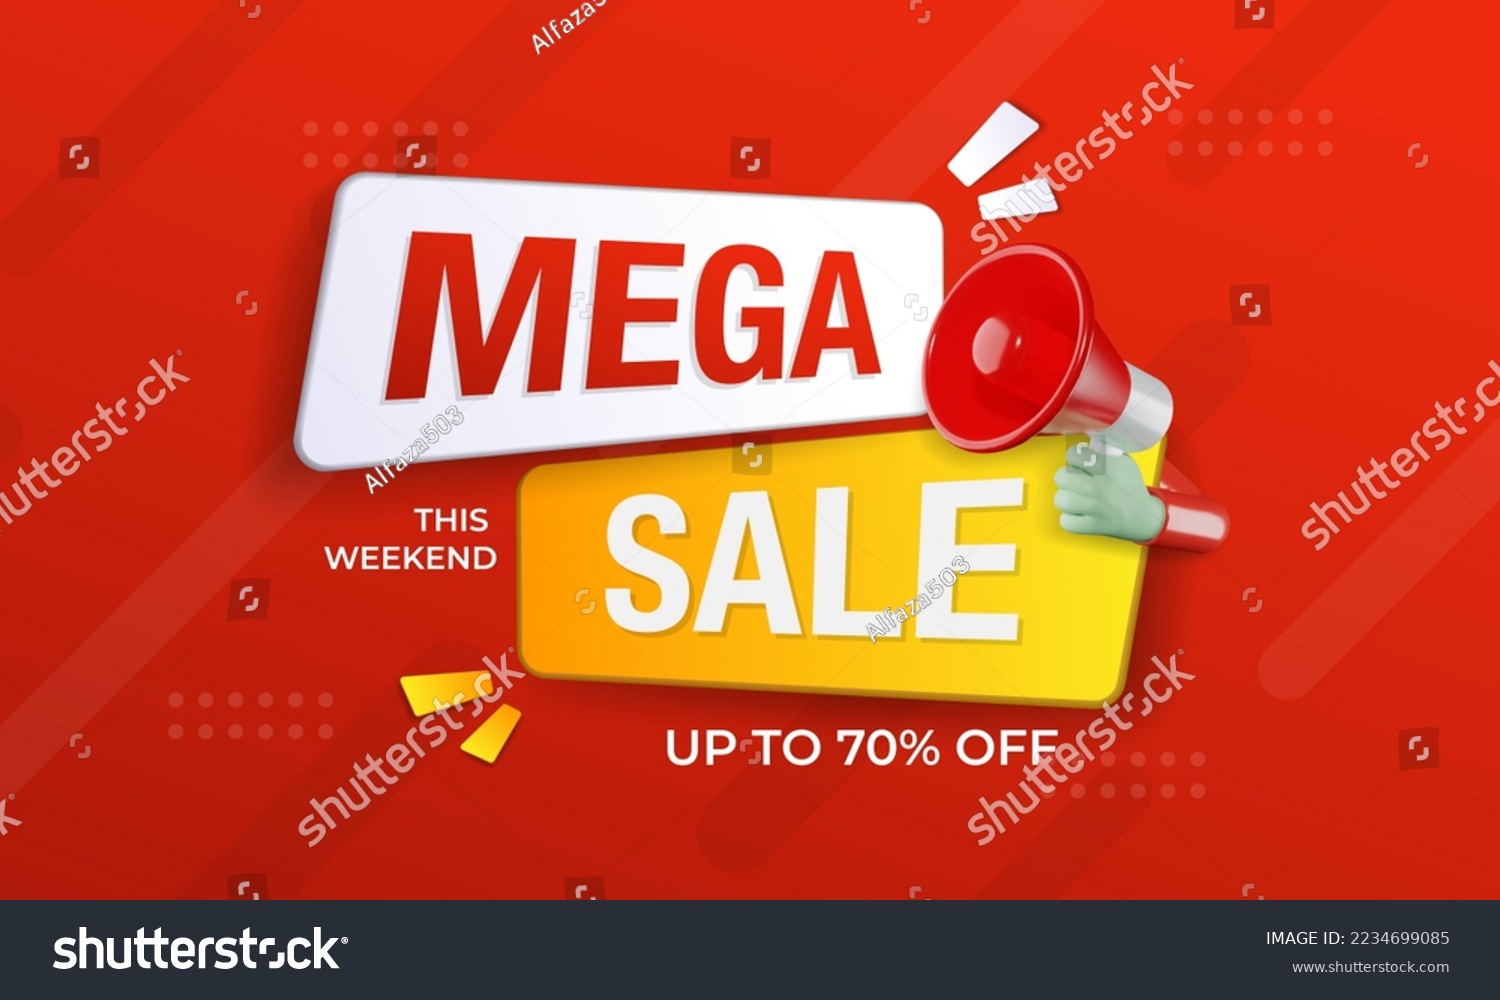 Mega sale banner promotion template with 3D megaphone on red background. Special deal label design #2234699085